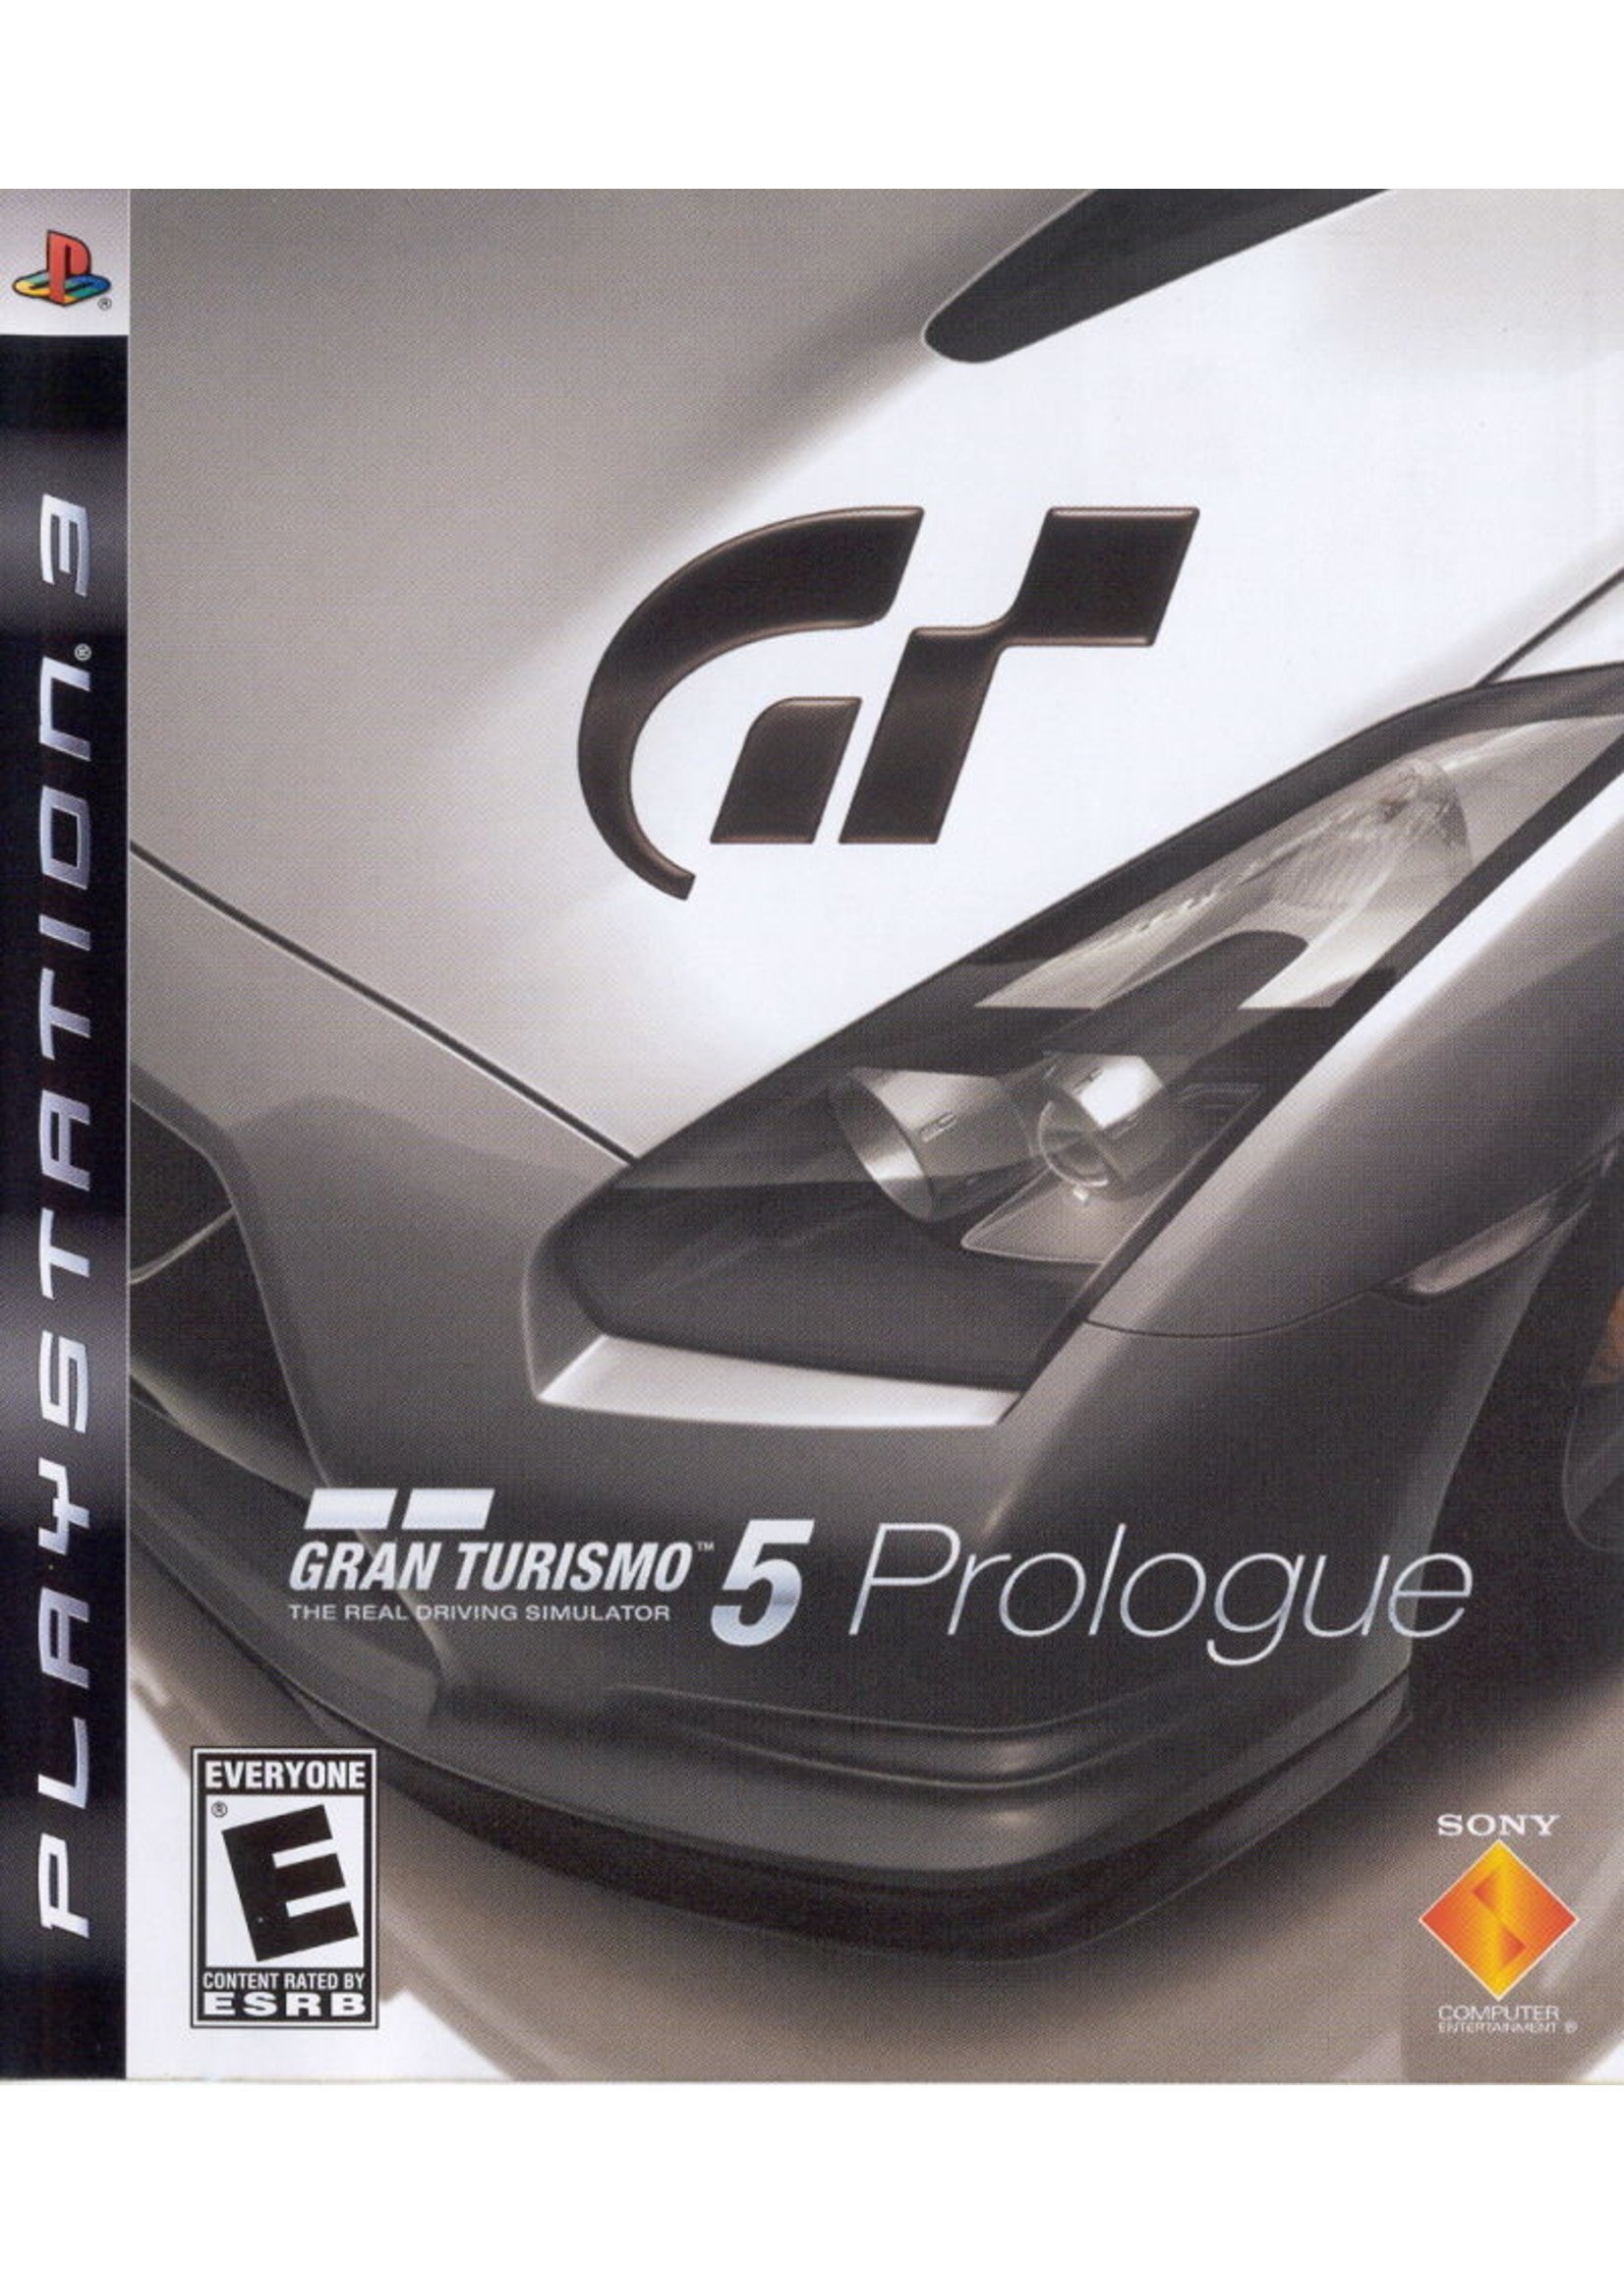 Sony Playstation 3 (PS3) Gran Turismo 5 Prologue